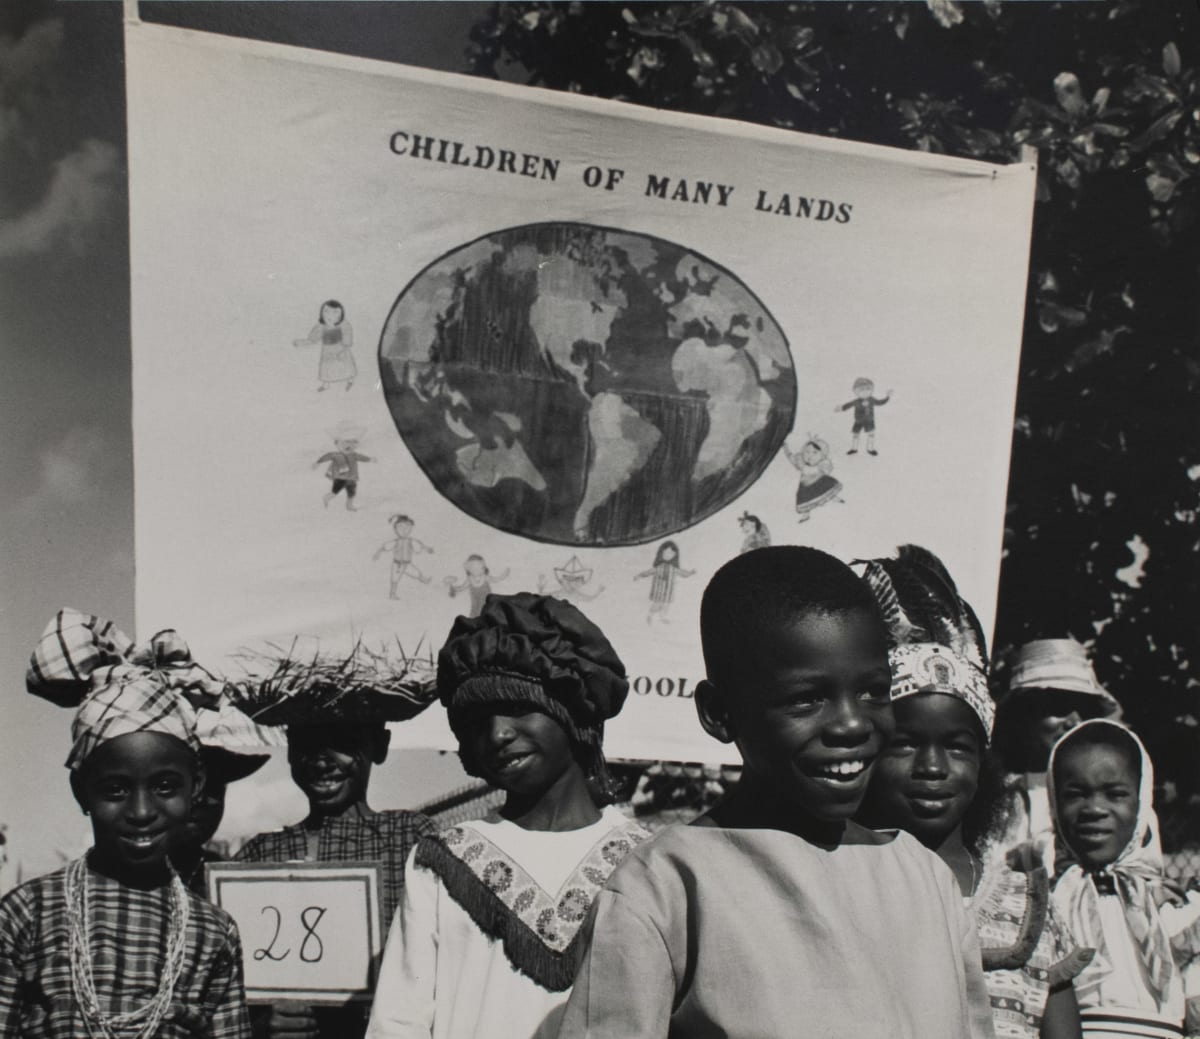 Children's Parade - Virgin Islands by Edward R. Miller 